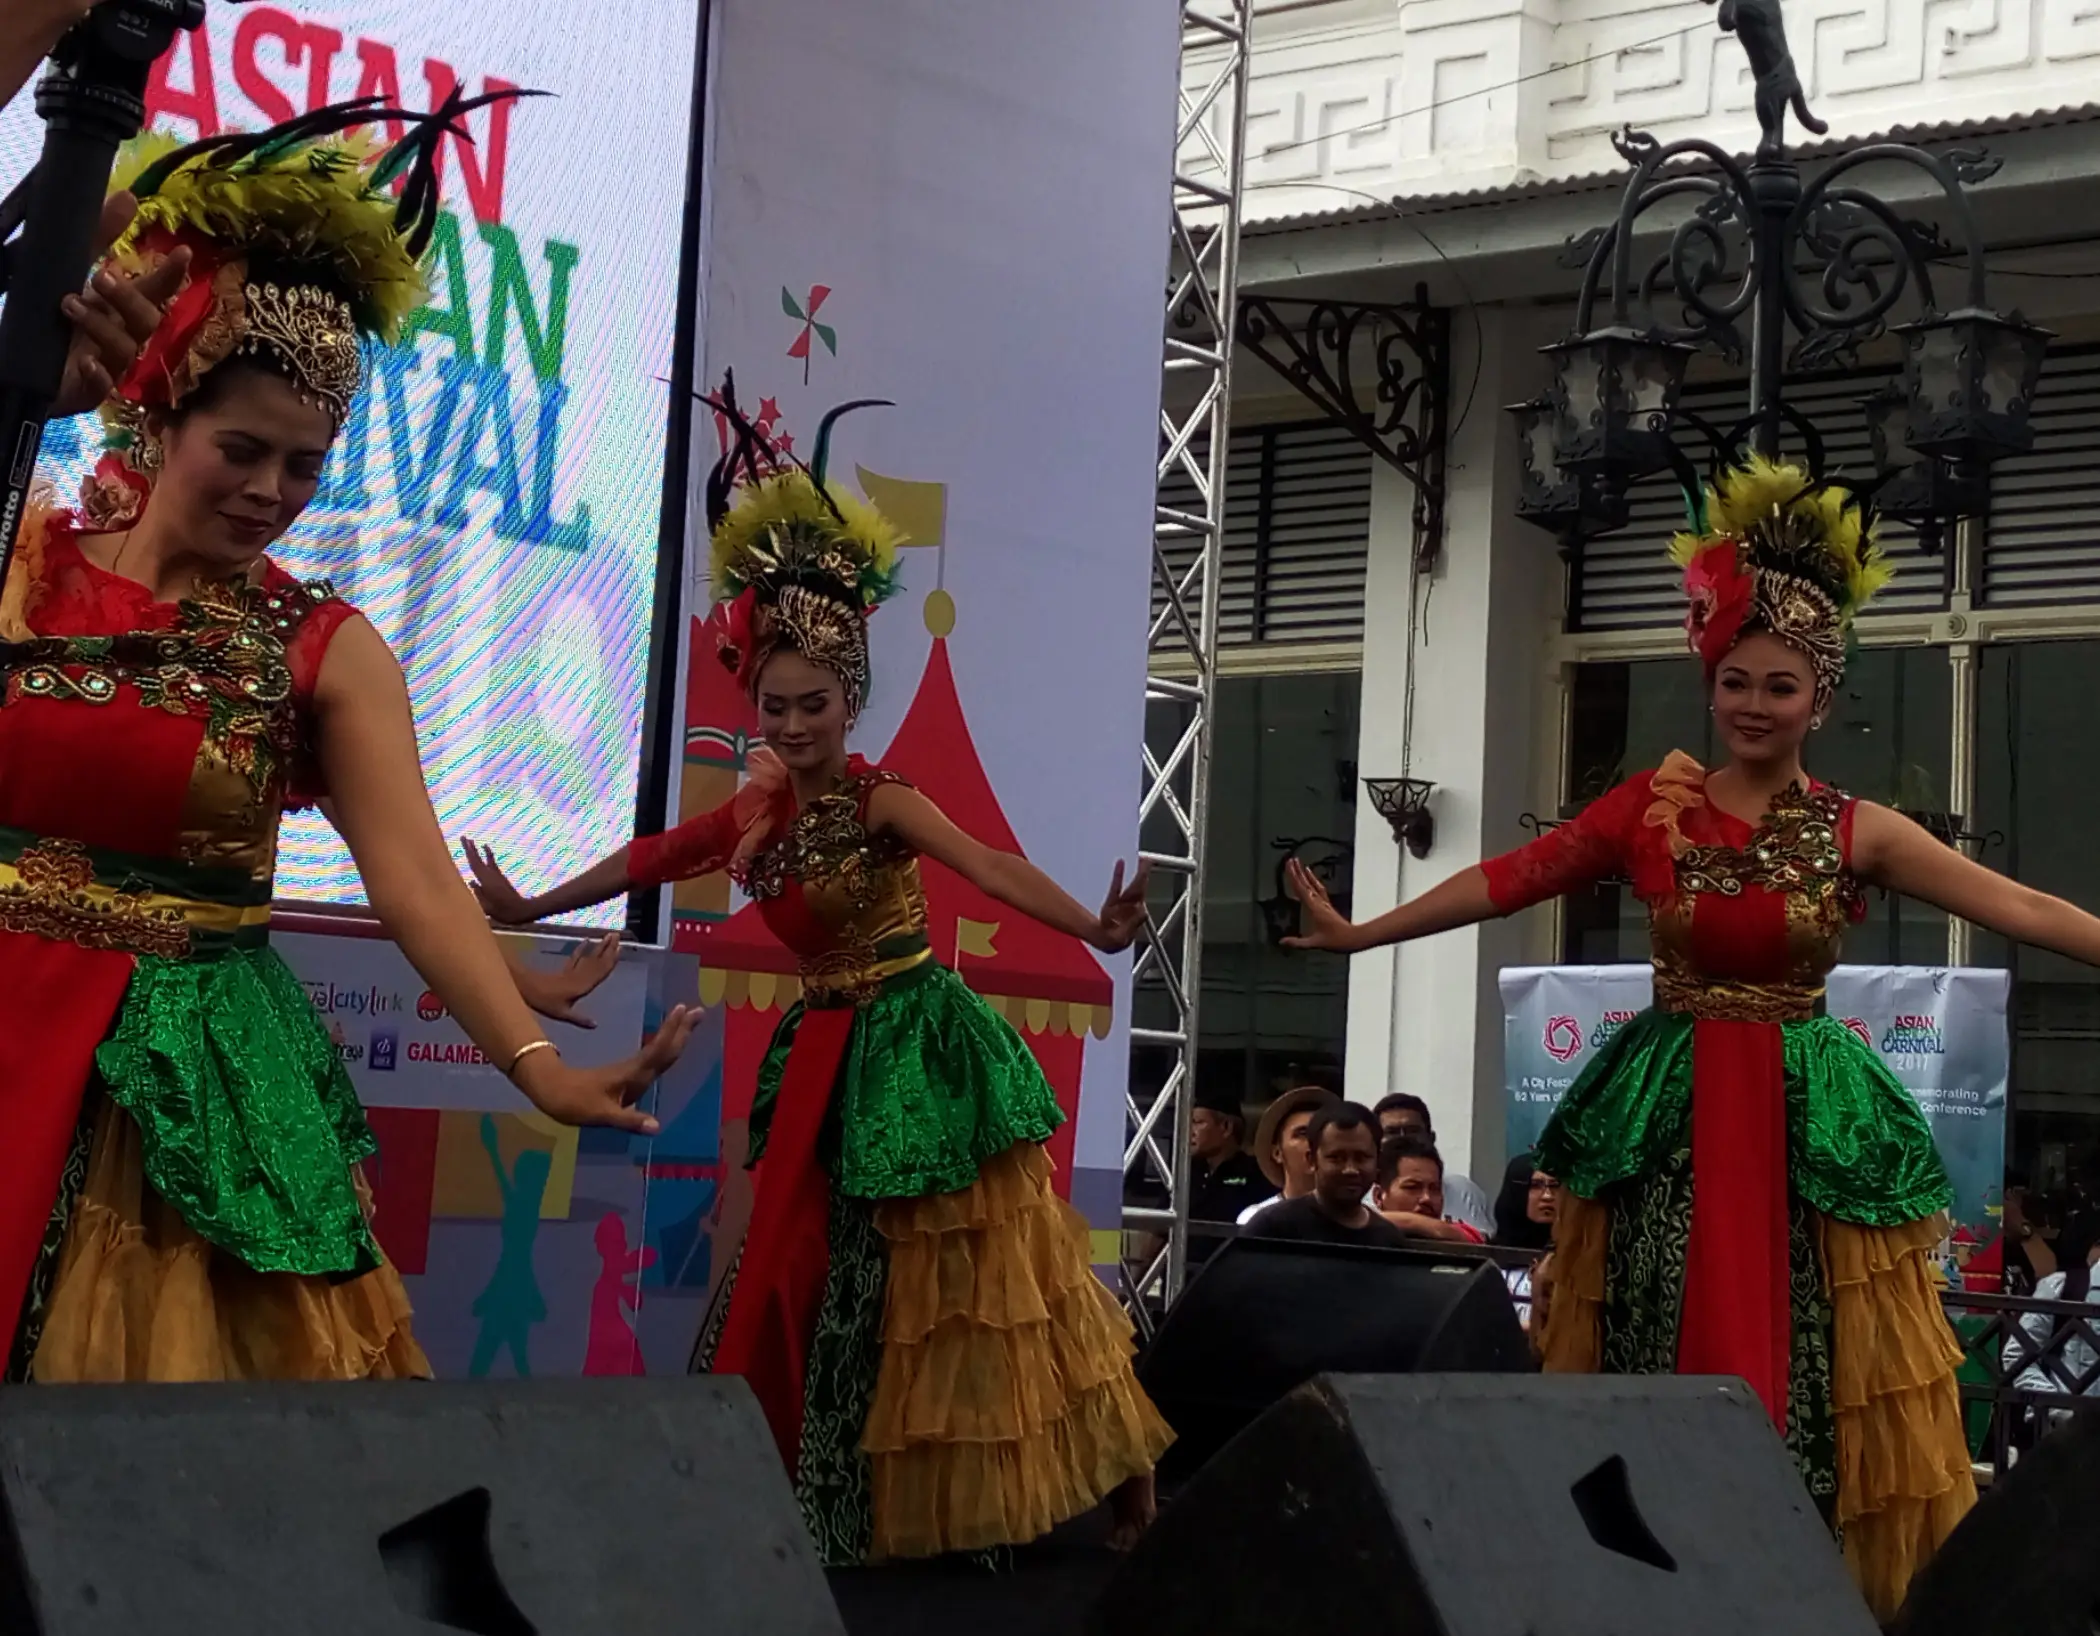 Karnaval Asia Afrika di kawasan Jalan Asia Afrika, Kota Bandung, Jawa Barat, berlangsung meriah dengan digelarnya parade budaya. (Liputan6.com/Huyogo Simbolon)